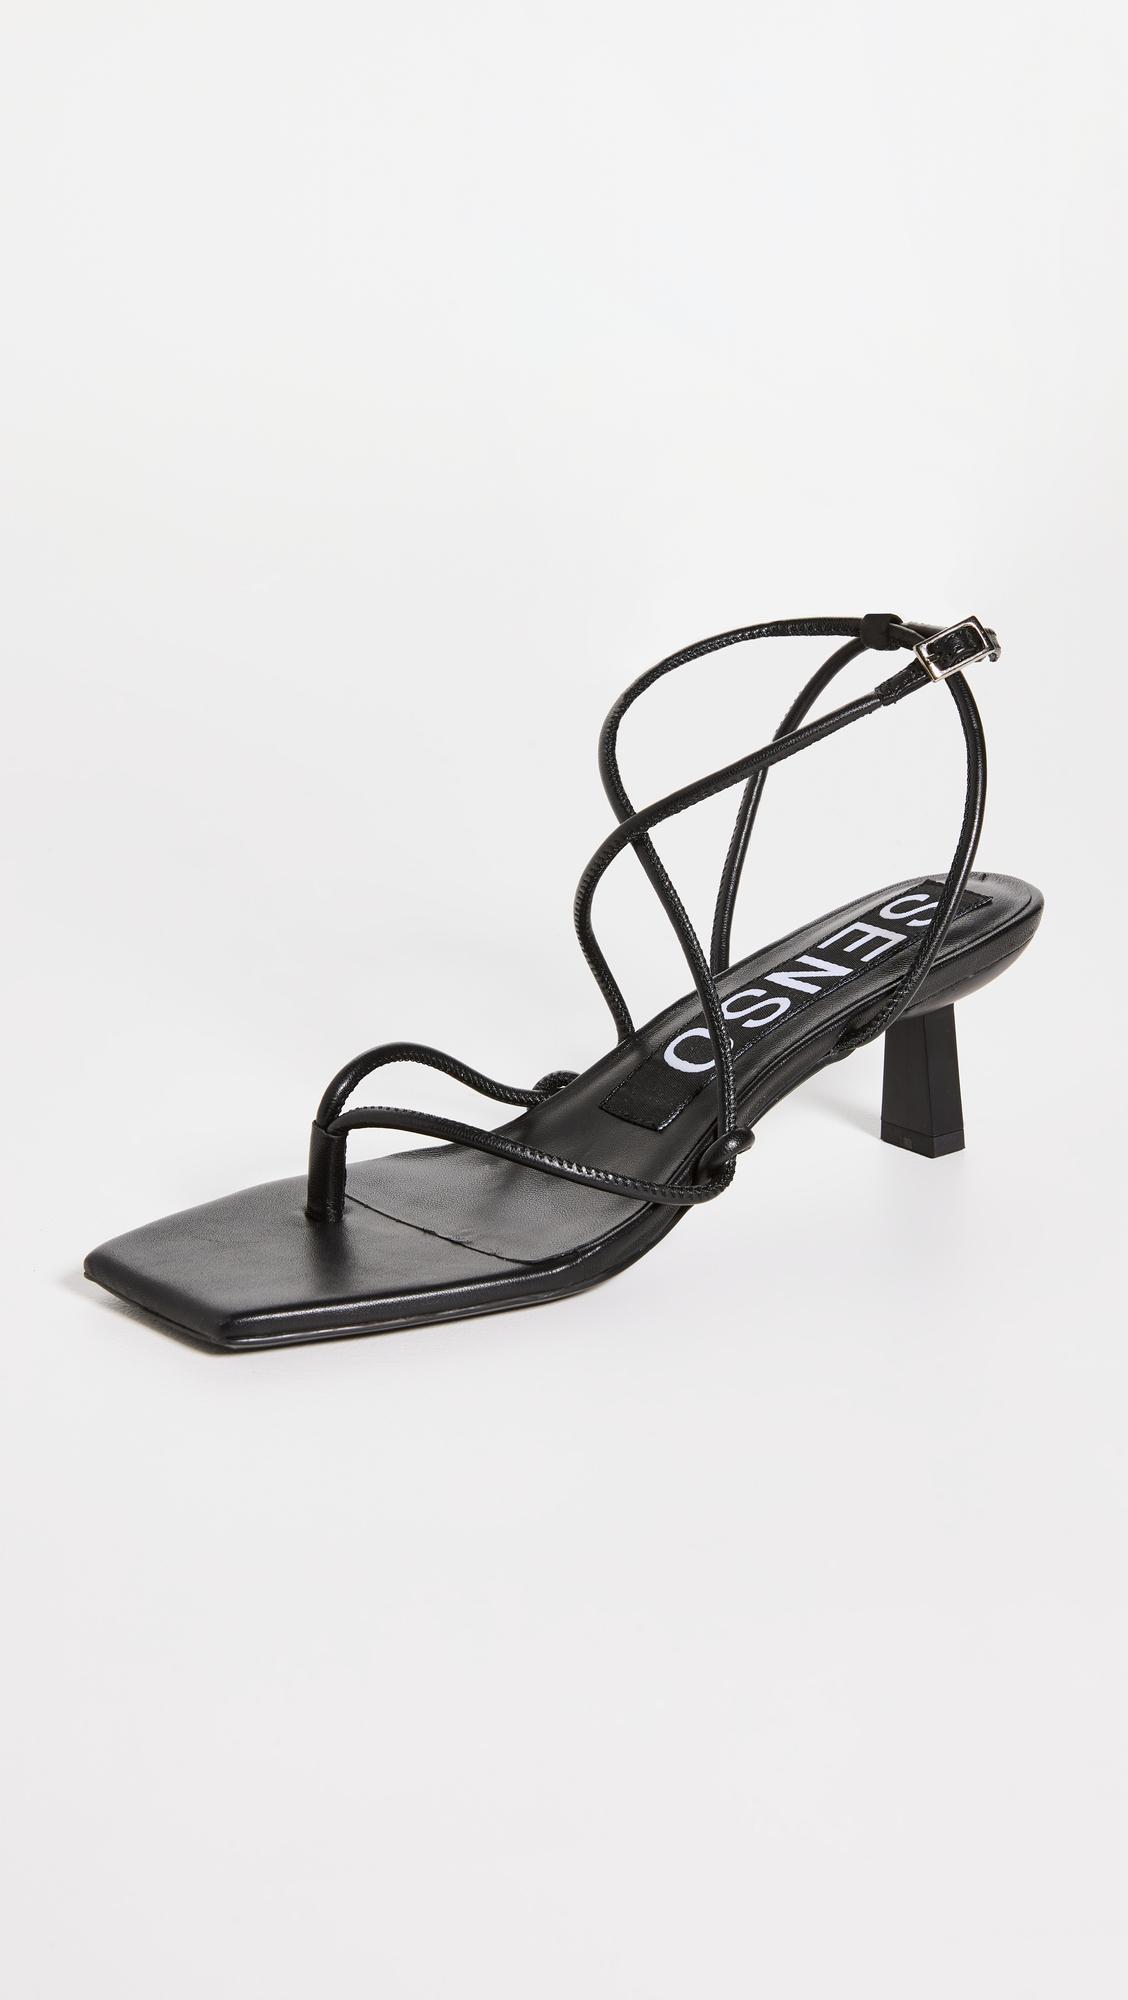 Senso Wella Strappy Sandals in Black | Lyst